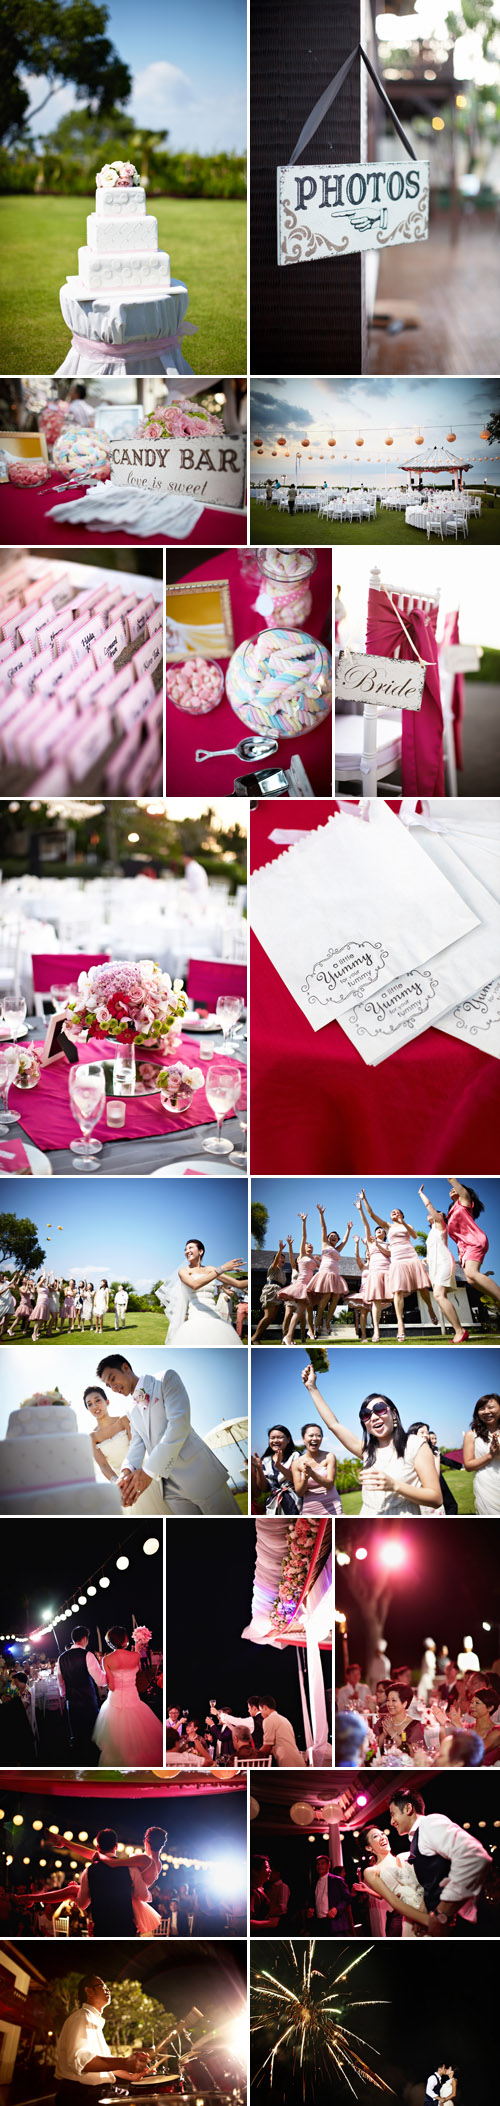 pink and gray destination wedding color ideas, Bali wedding at Ritual Chapel and Ayana Resort & Spa, photos by Tinydot Photography